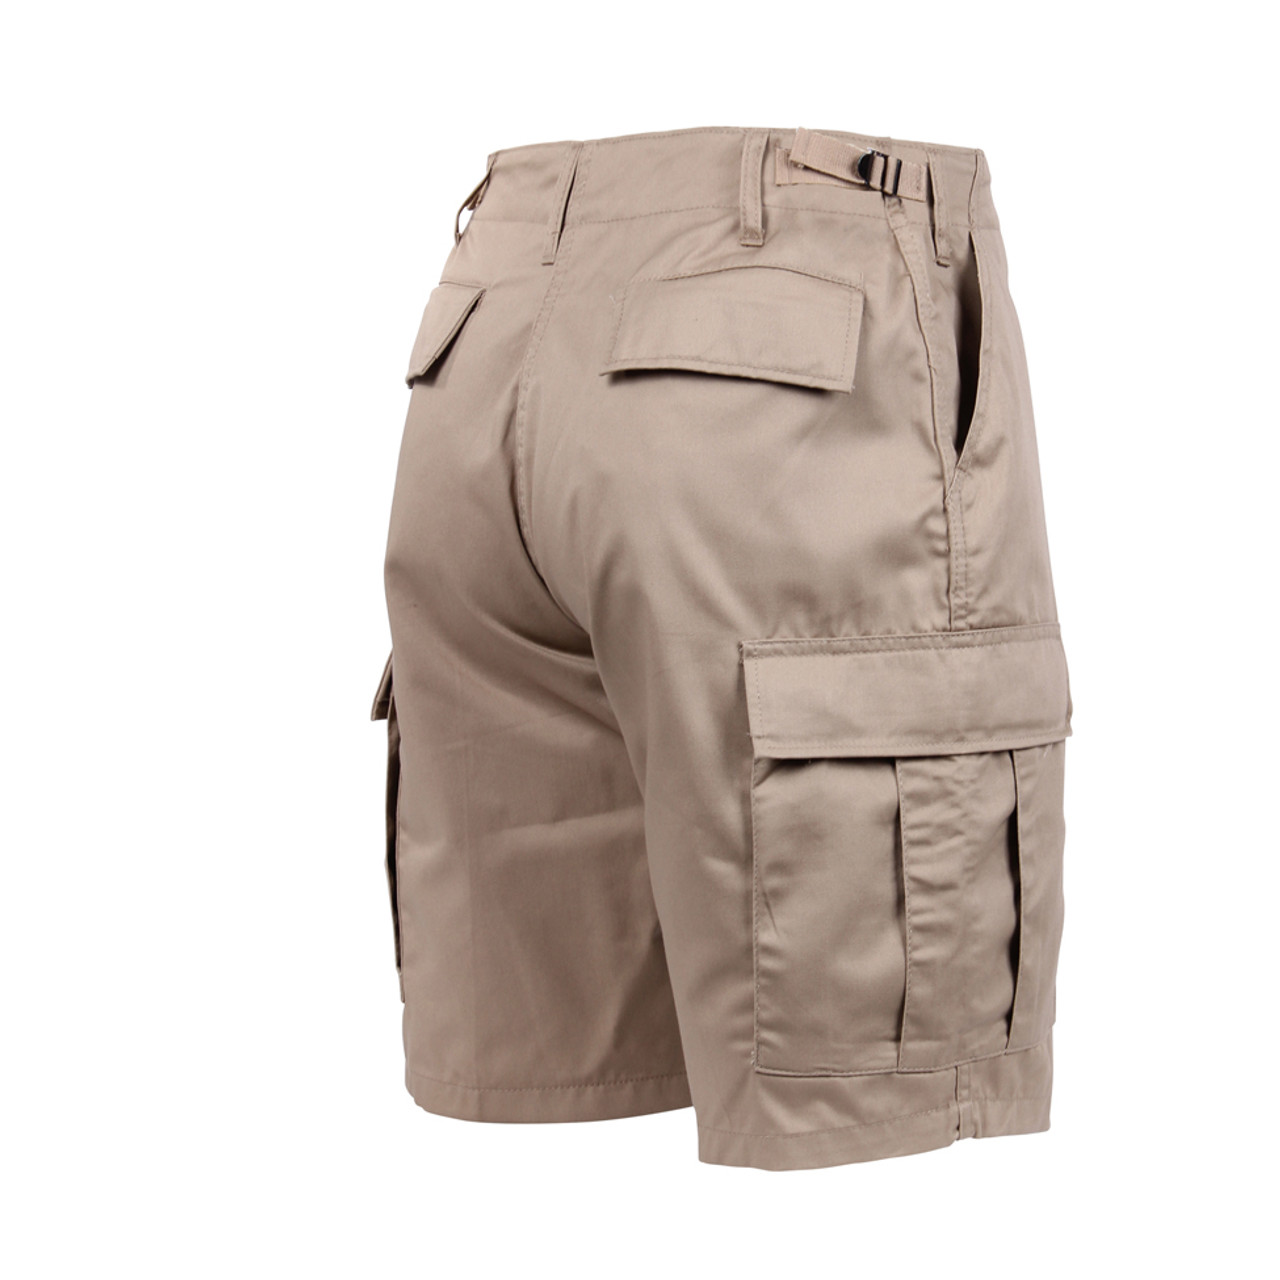 Military Tan Shorts - Shop Khaki Fatigues Gear Navy BDU Army